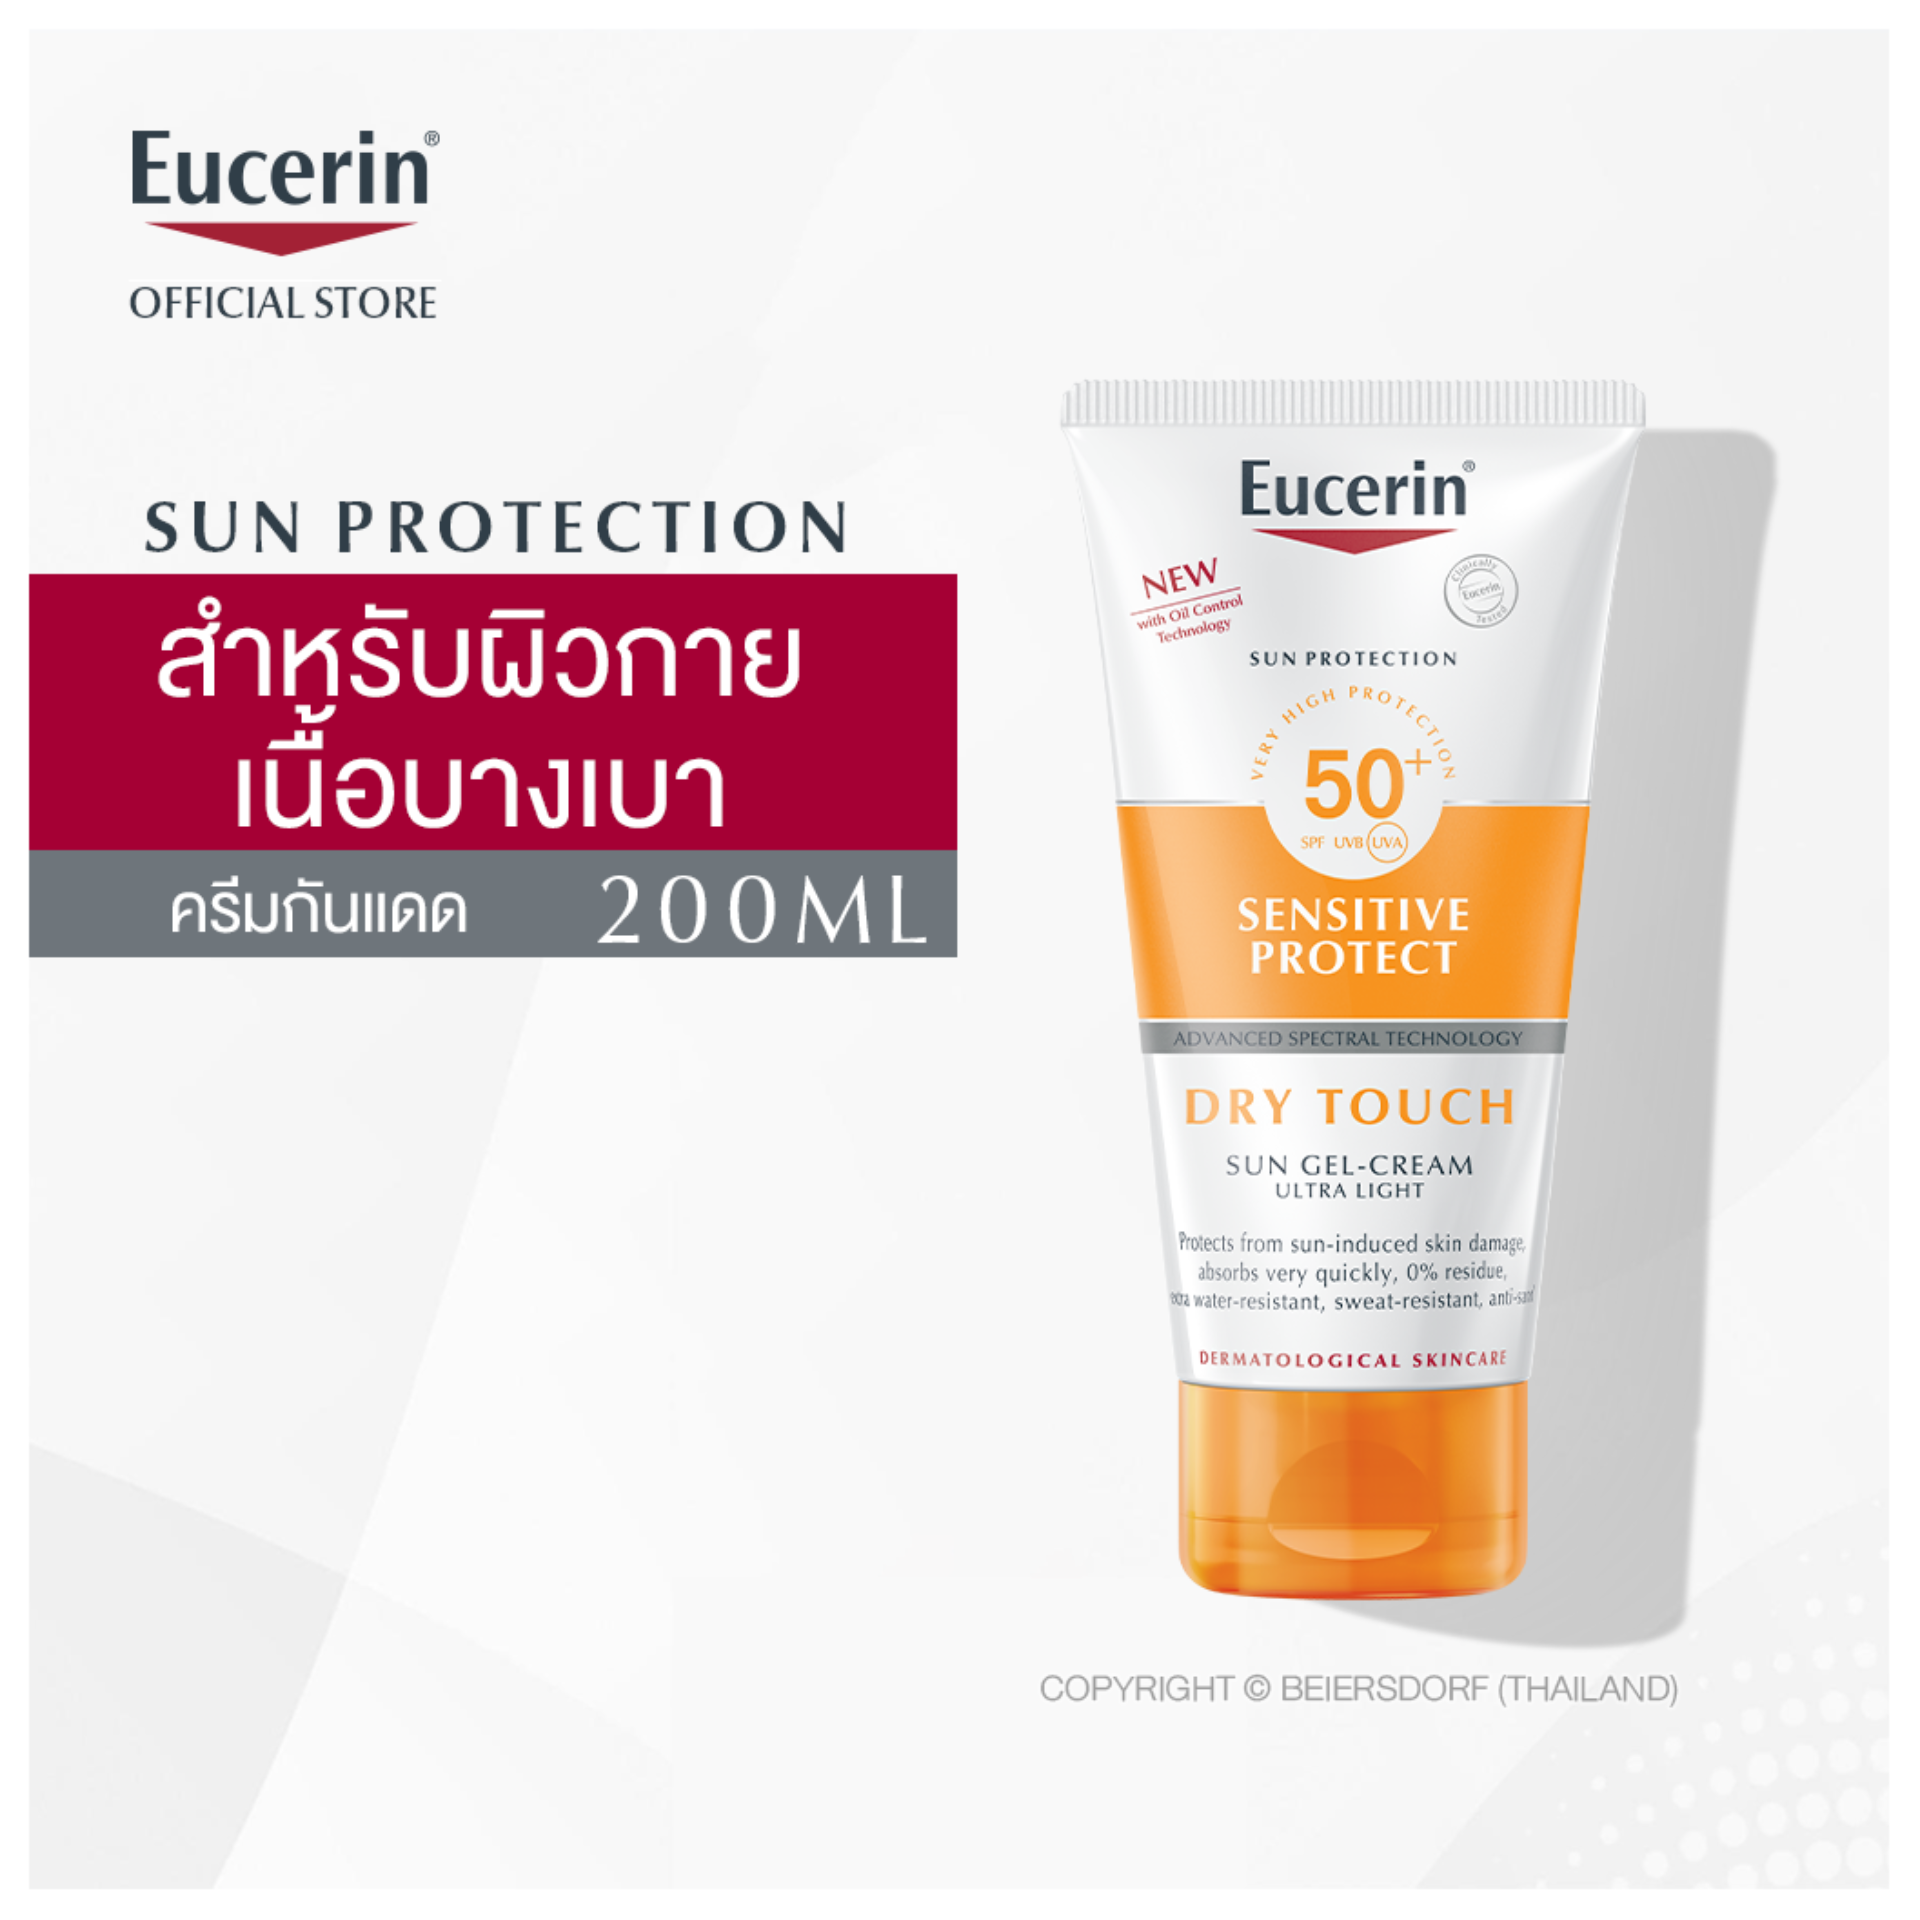 Eucerin Sun Body Sensitive Protect Dry Touch SPF 50+ PA++++ 200ml ยูเซอริน ซัน บอดี้ เซนซิทีฟ โพรเทค ดราย ทัช ครีมกันแดดสำหรับผิวกาย 200มล